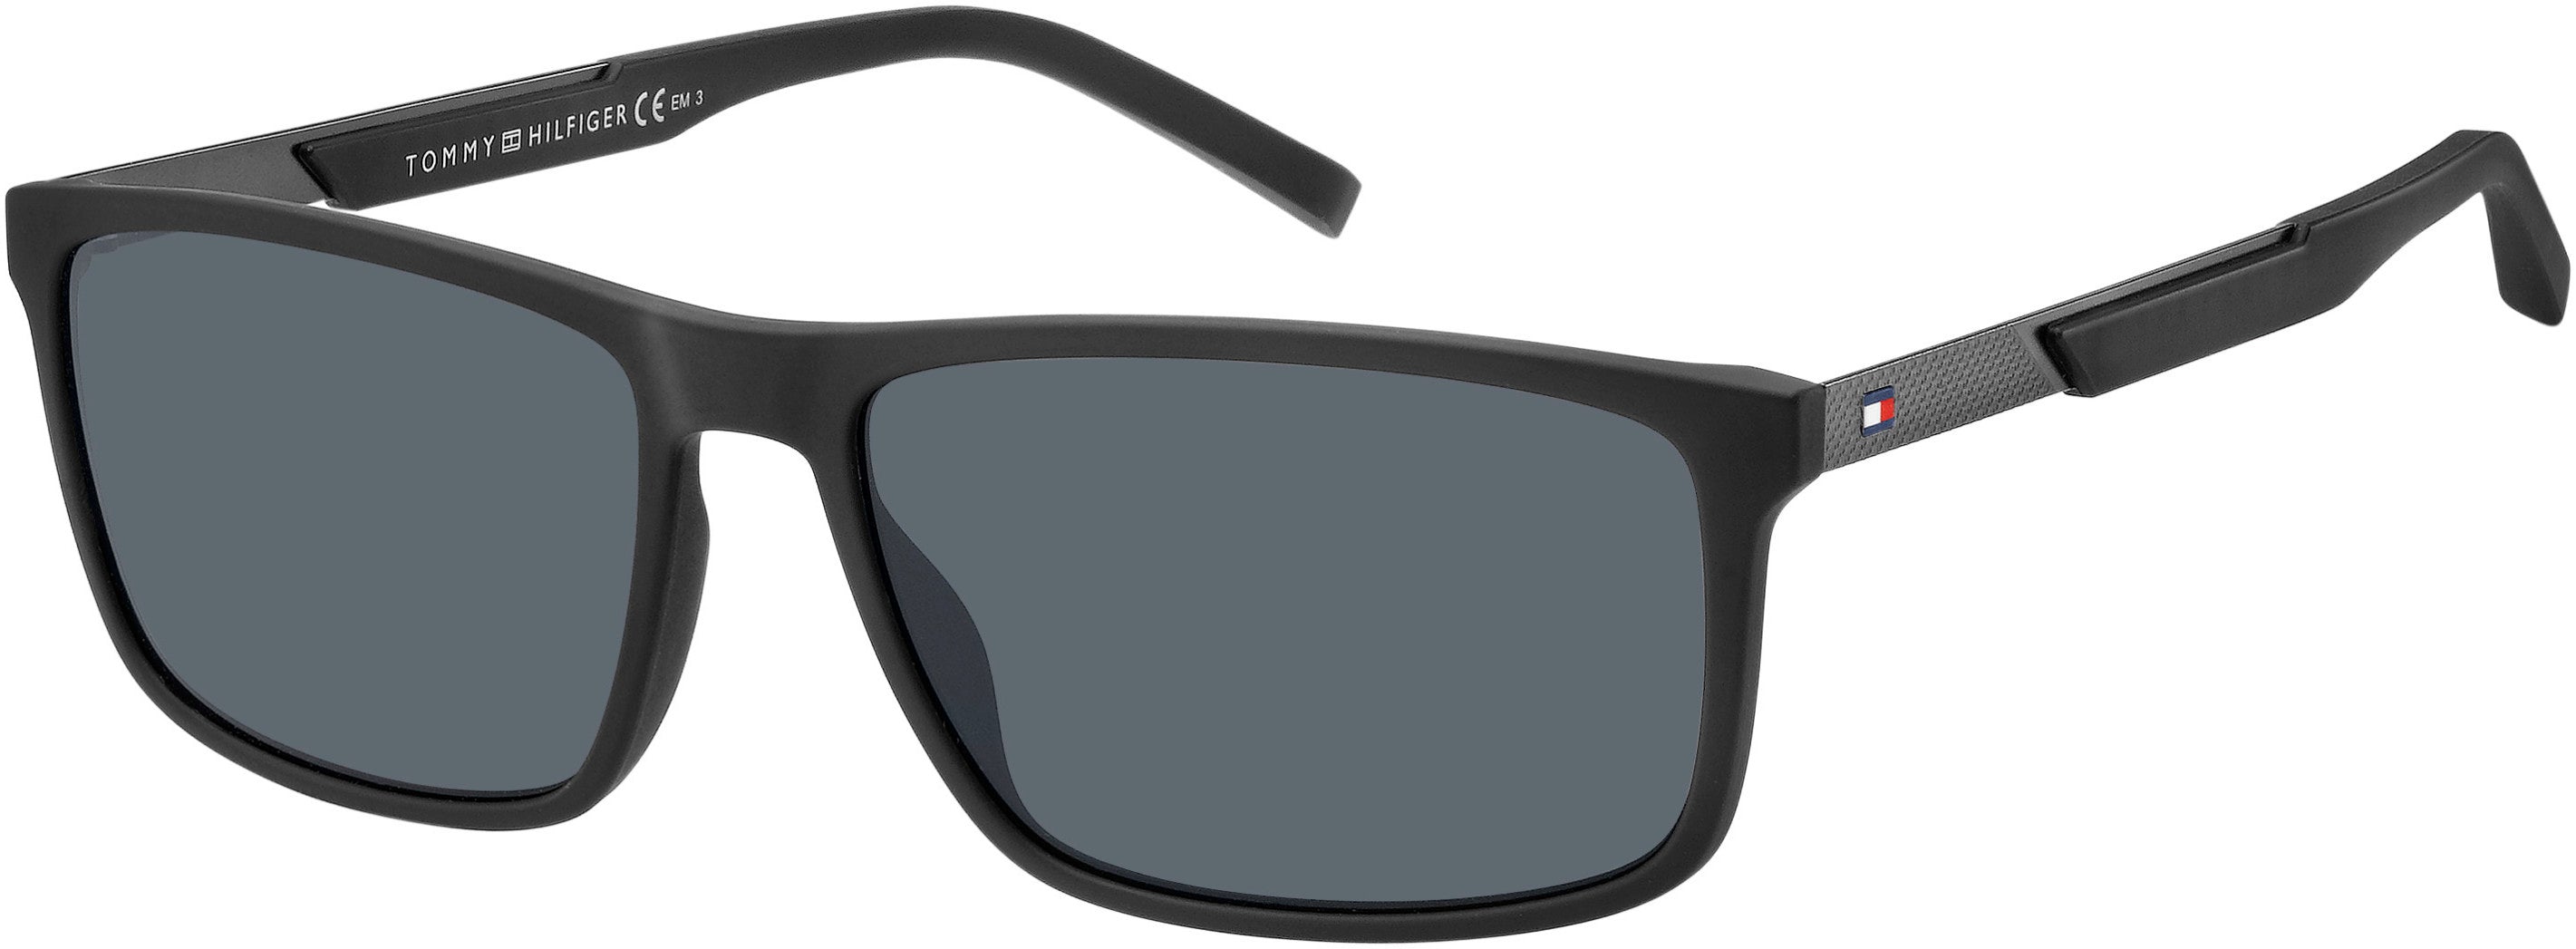 Tommy Hilfiger T. Hilfiger 1675/S Rectangular Sunglasses 0003-0003  Matte Black (IR Gray)